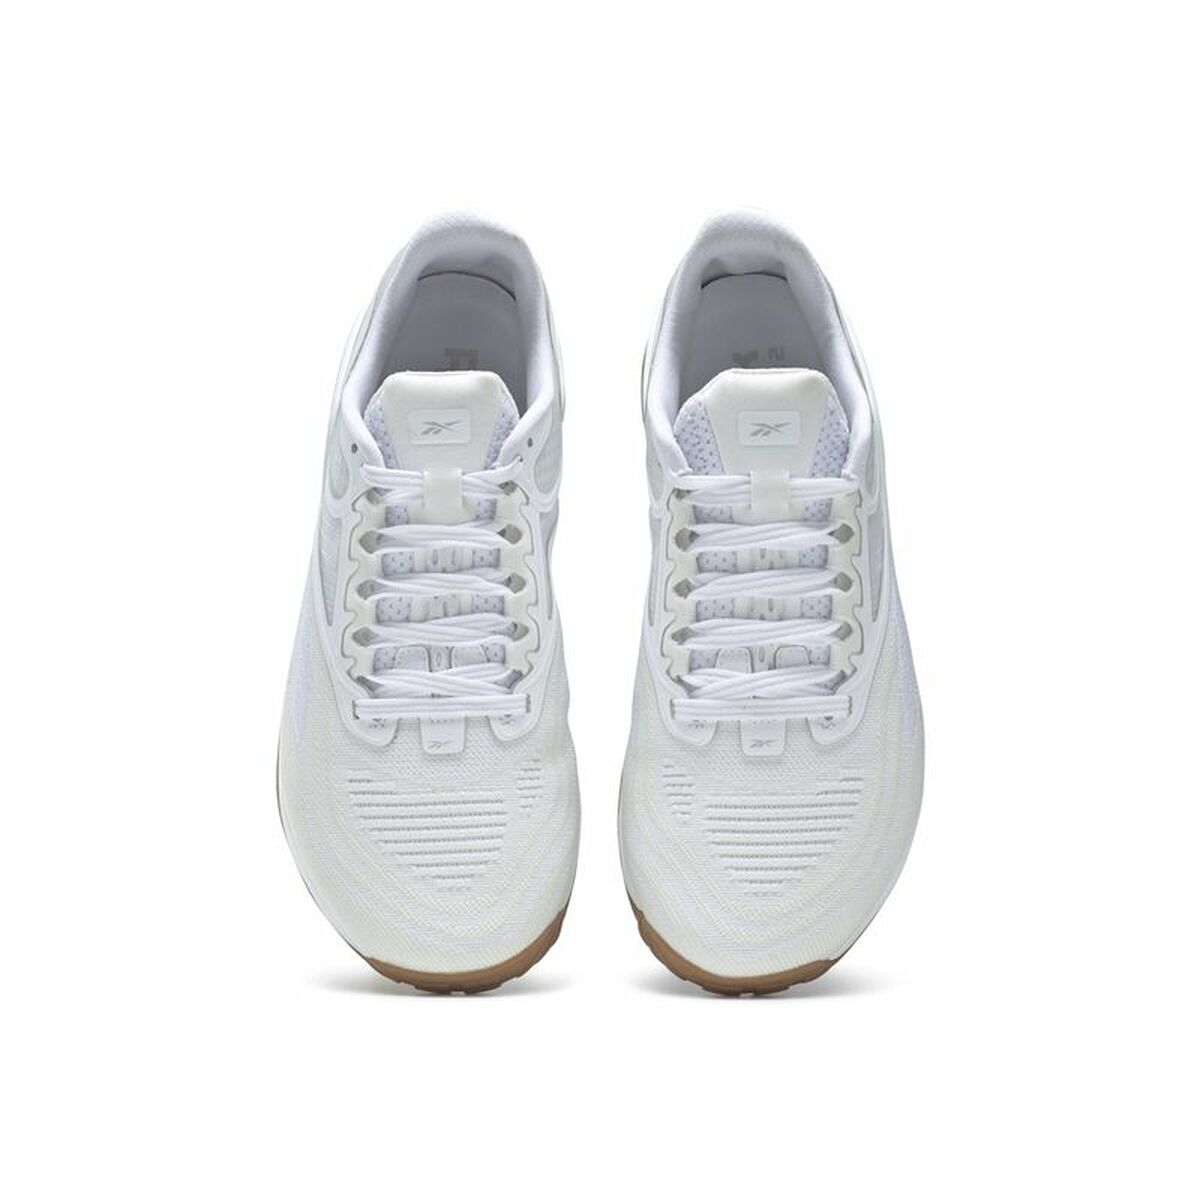 Chaussures de sport pour femme Reebok Nano X2 Blanc